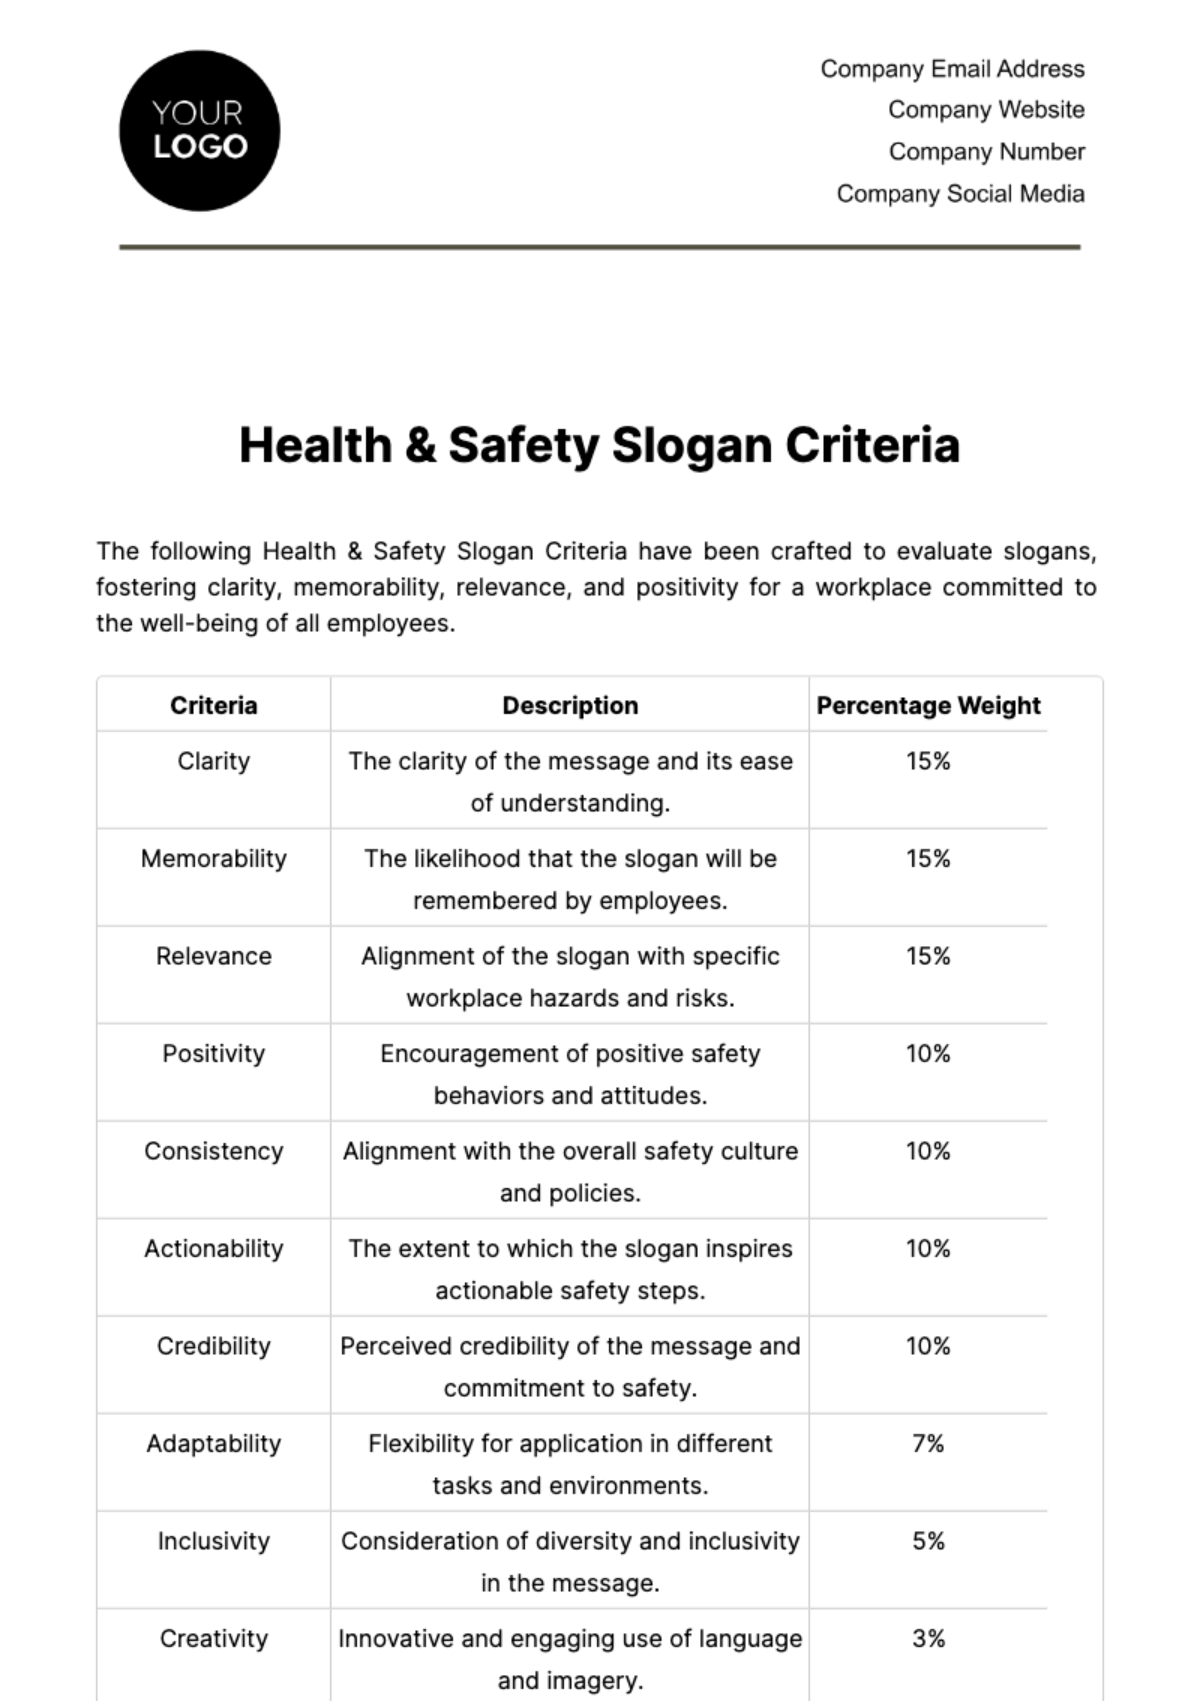 Free Health & Safety Slogan Criteria Template